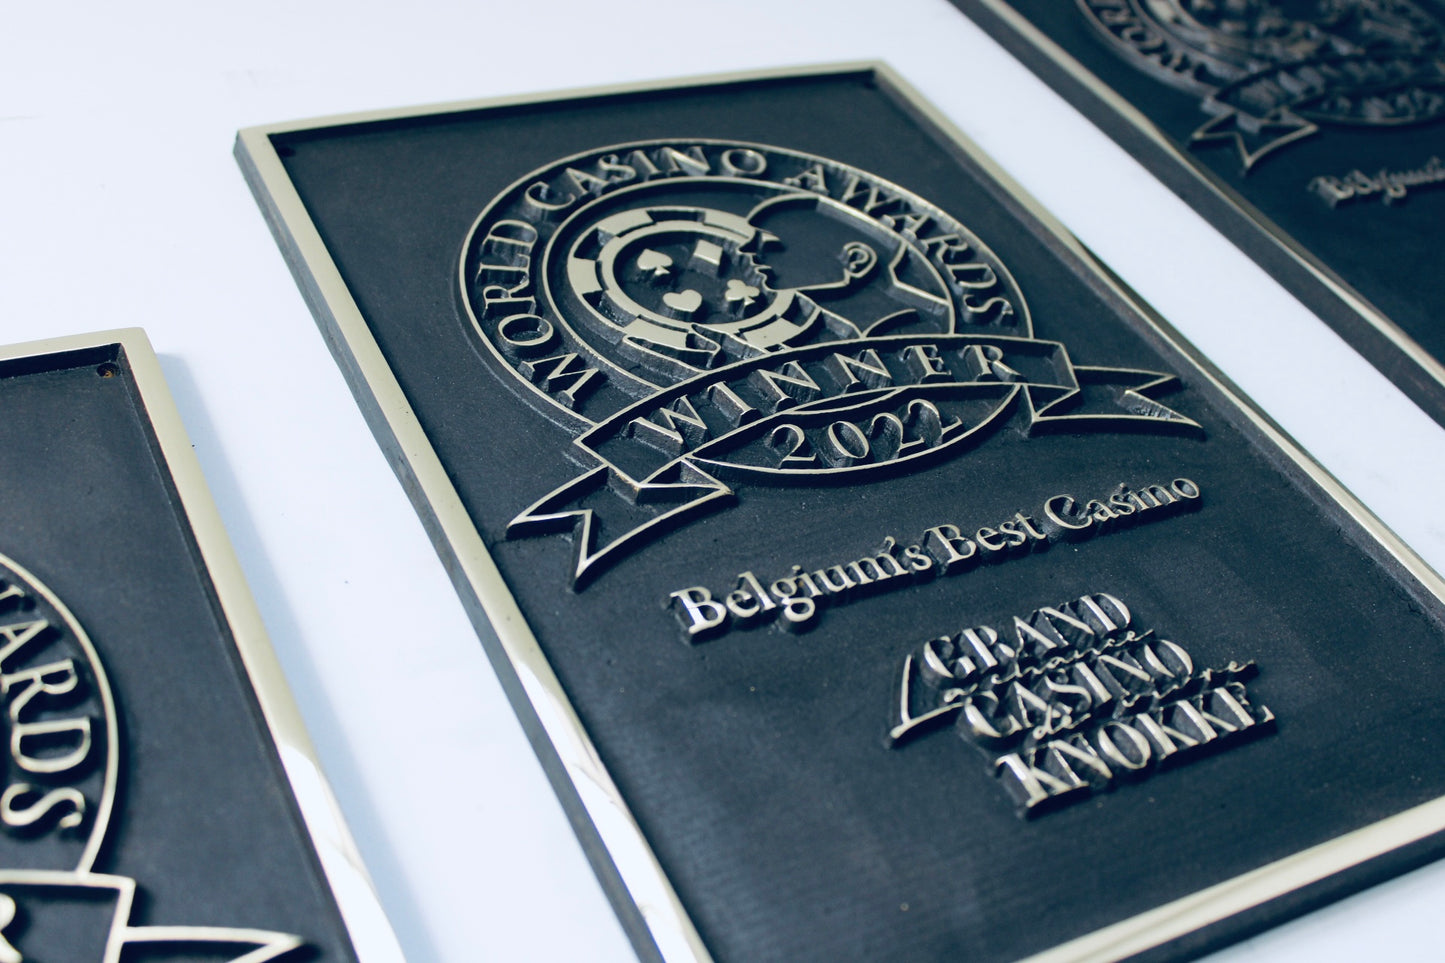 Award Plaques in bronze